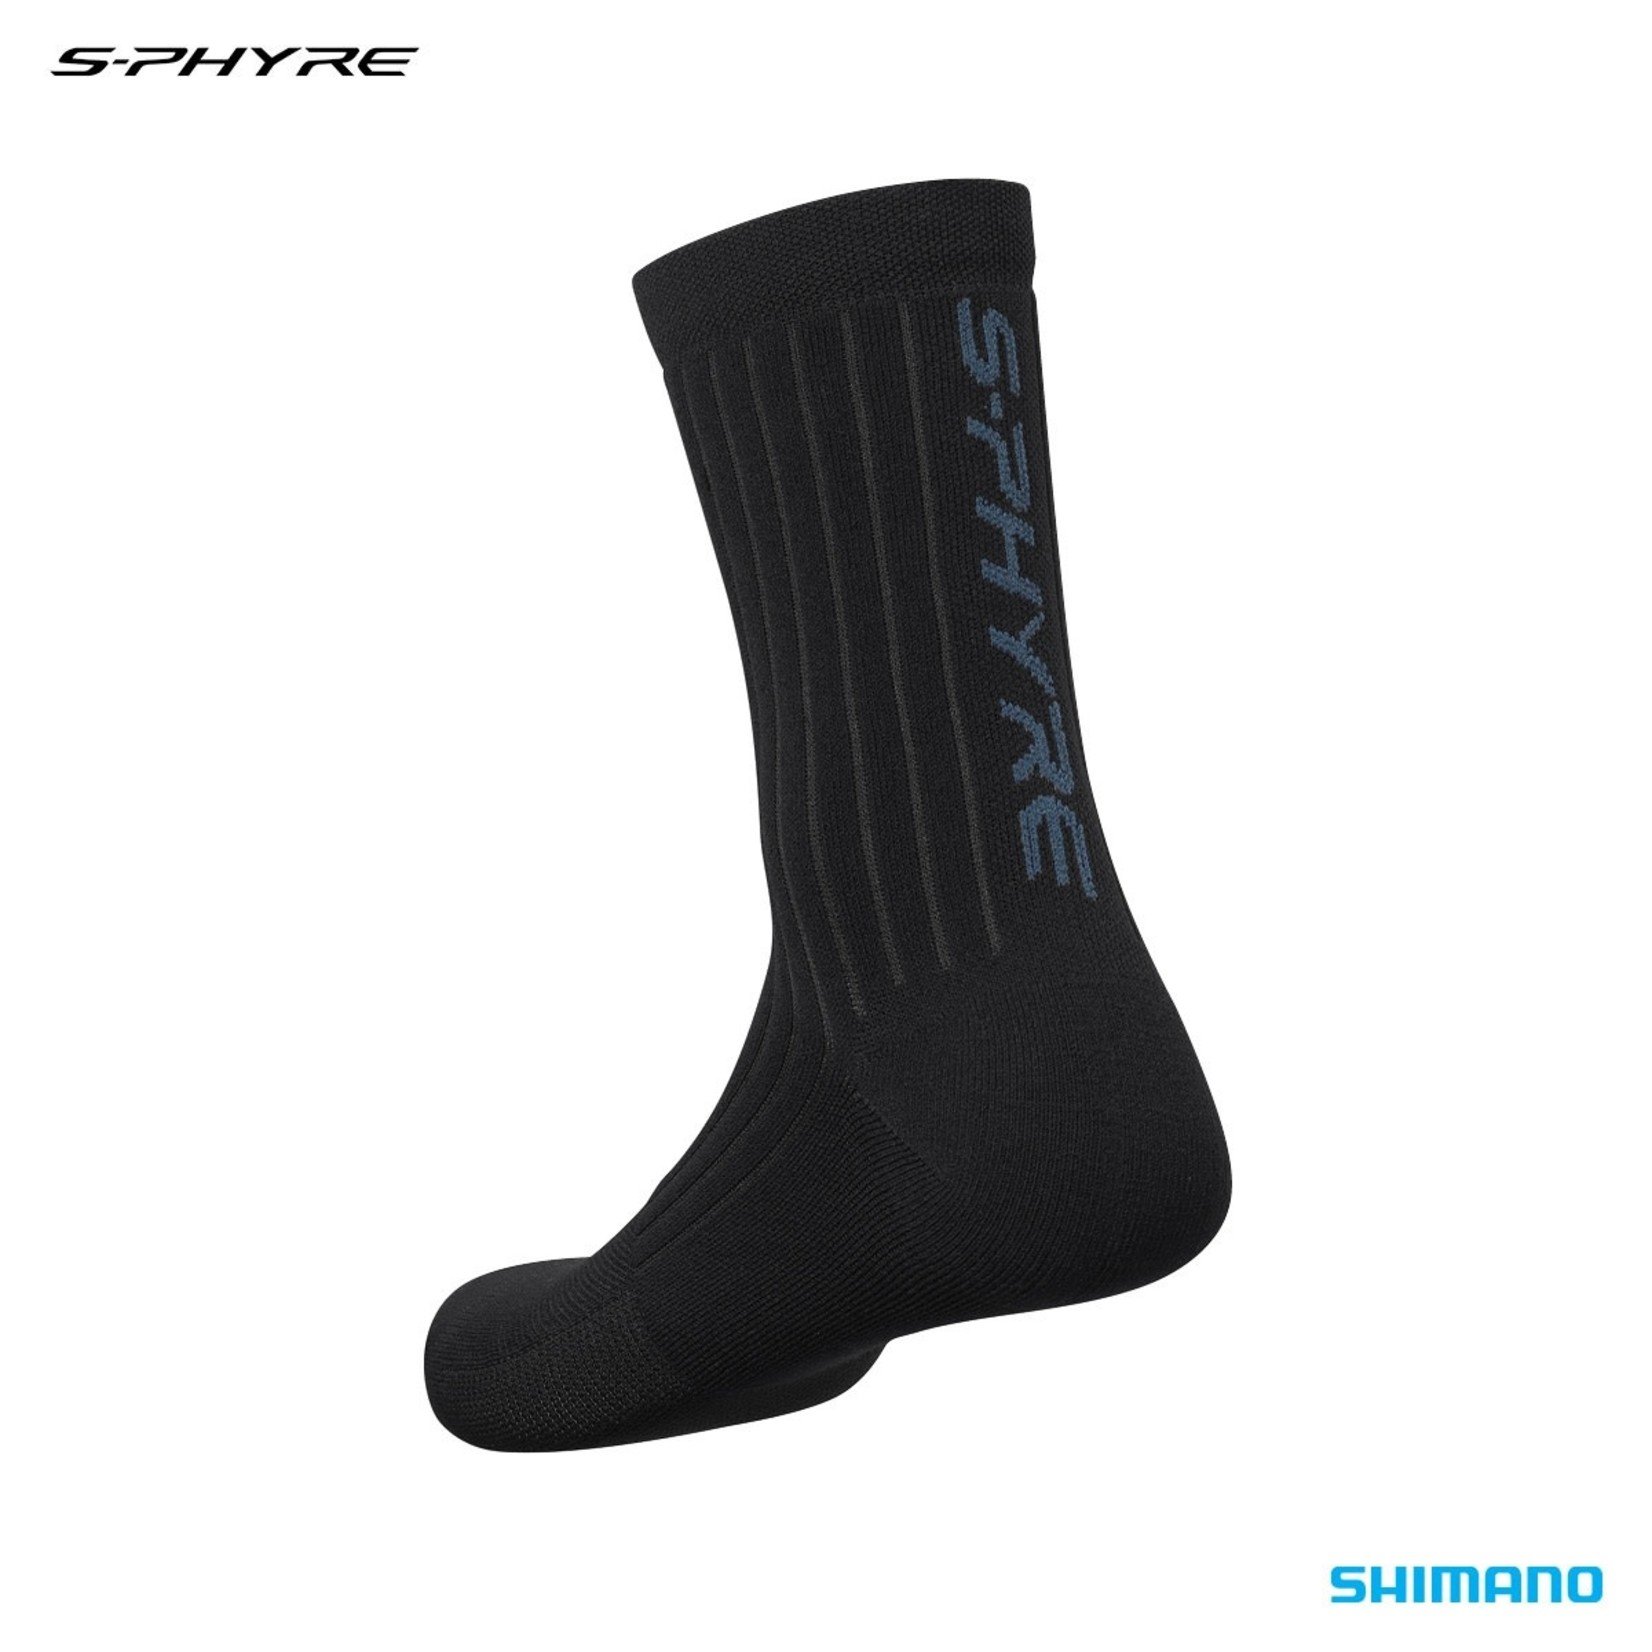 Shimano Shimano S-Phyre Flash Socks - Black